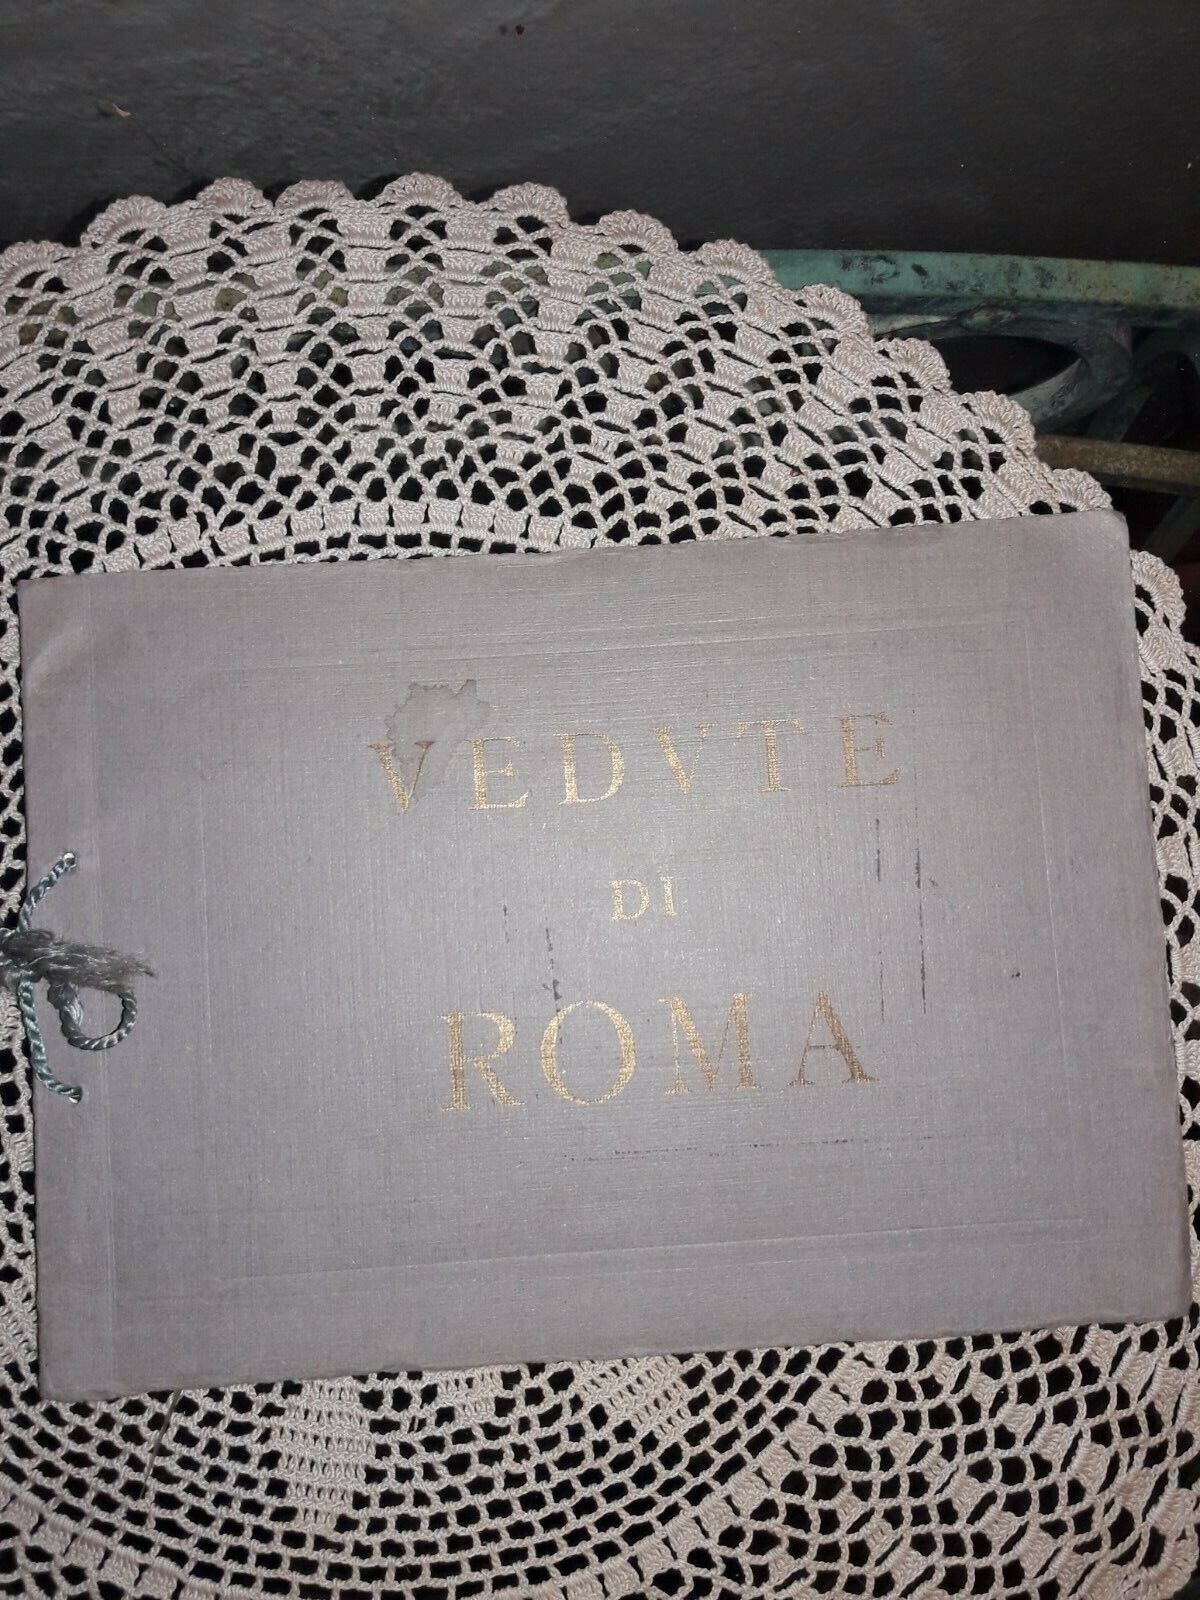 VEDVTE di ROMA hand-tied book, Italian locations like the Vatican,1944, Italian